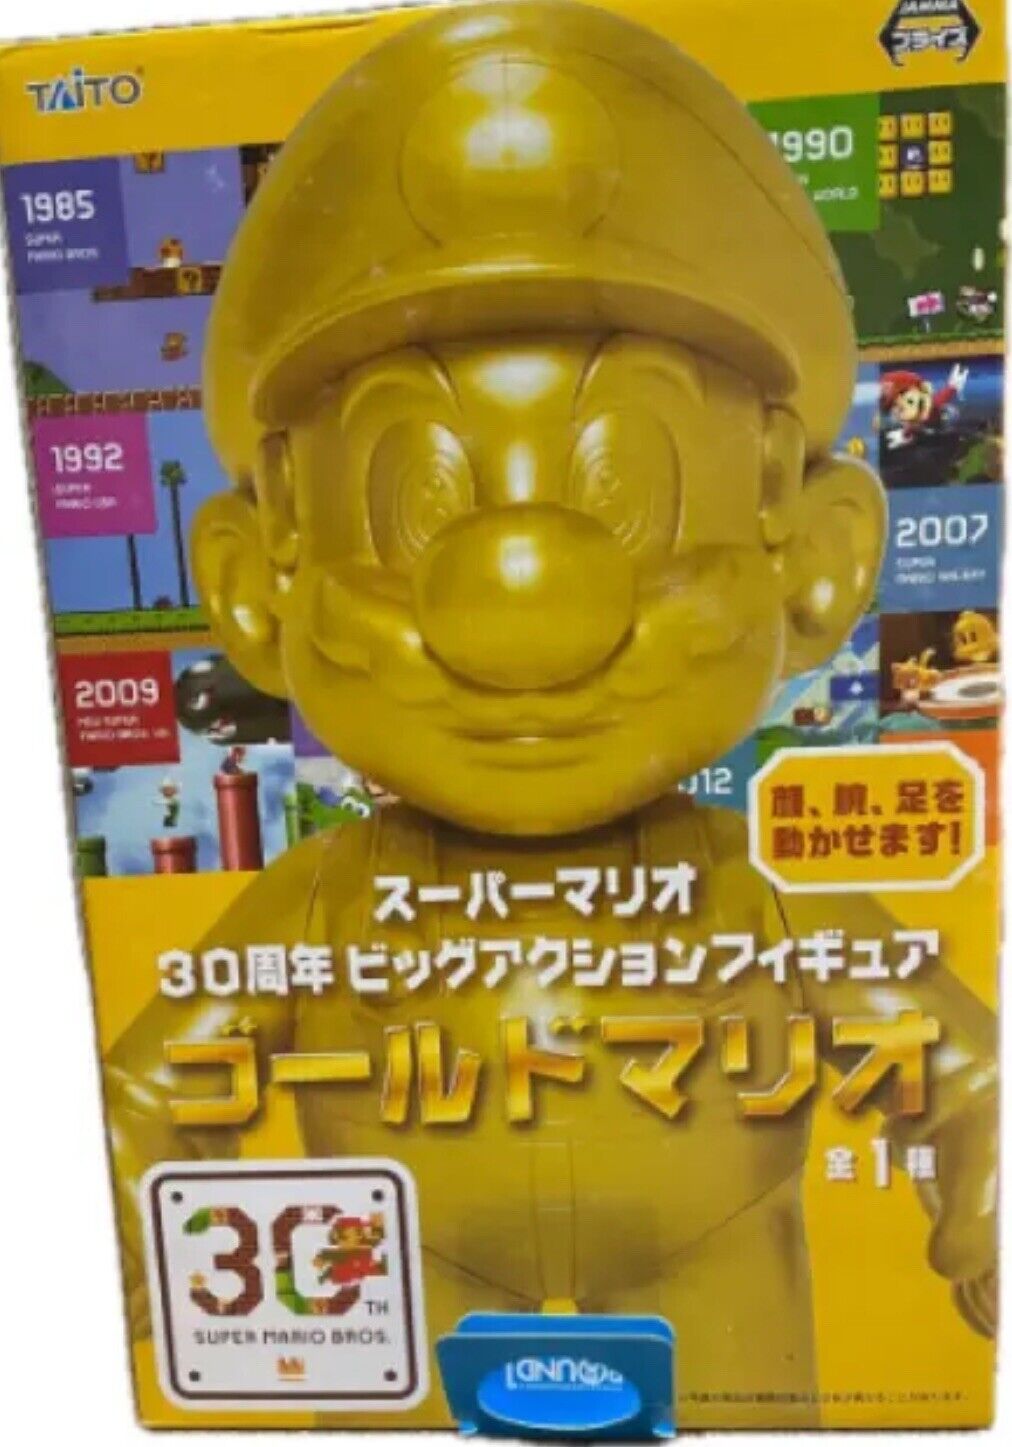 Super Mario Gold Mario 30th Anniversary Big Action Figure Nintendo TAITO